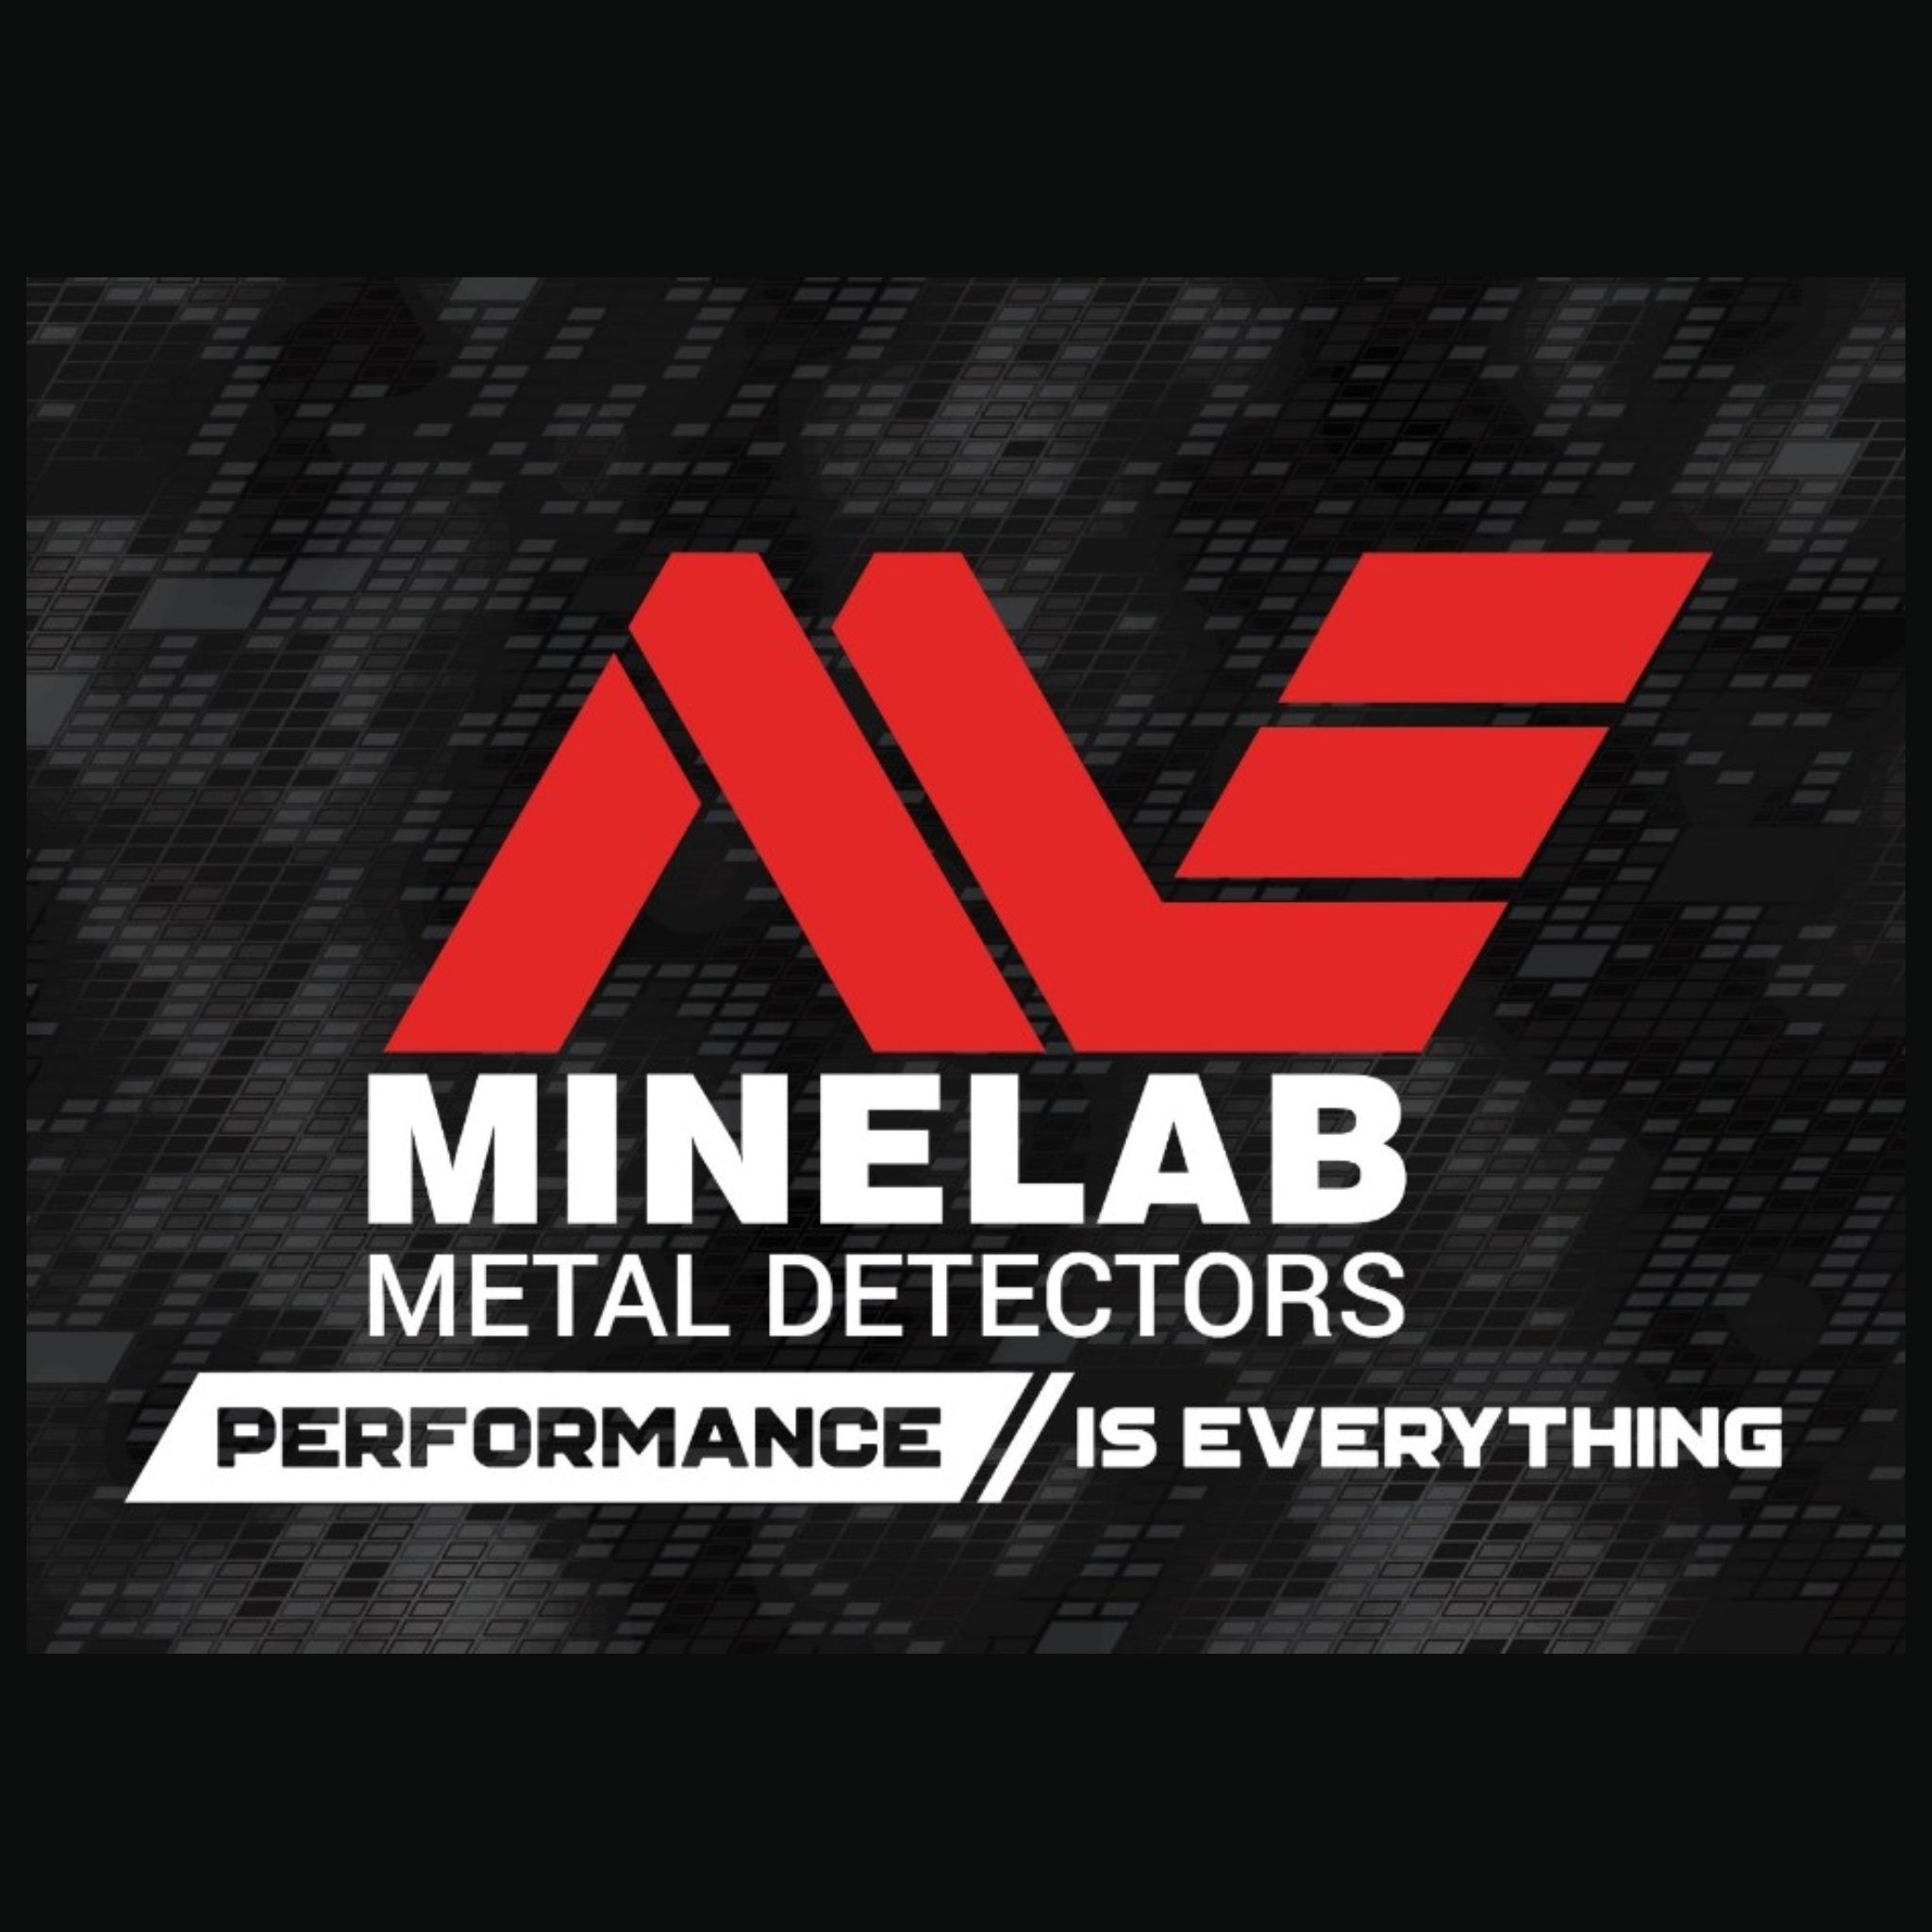 Minelab Metal Detector Experts